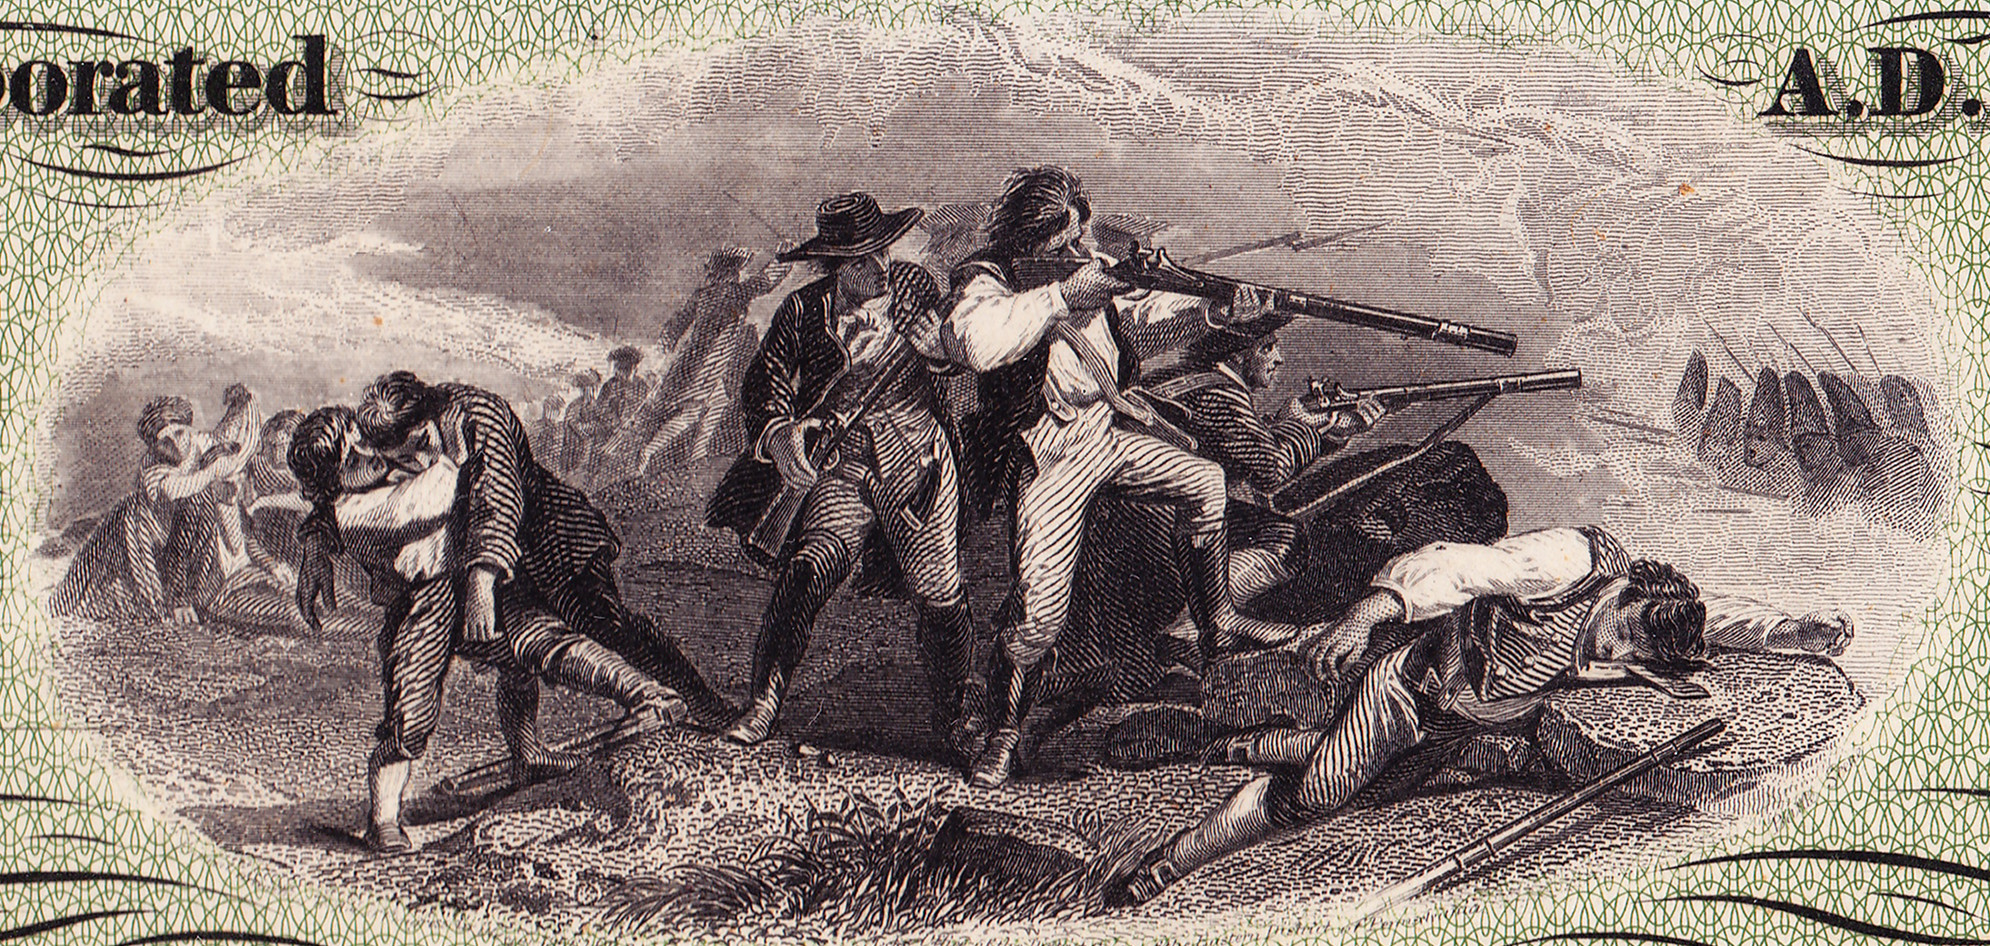 Central vignette showing the Battle of Rhode Island.